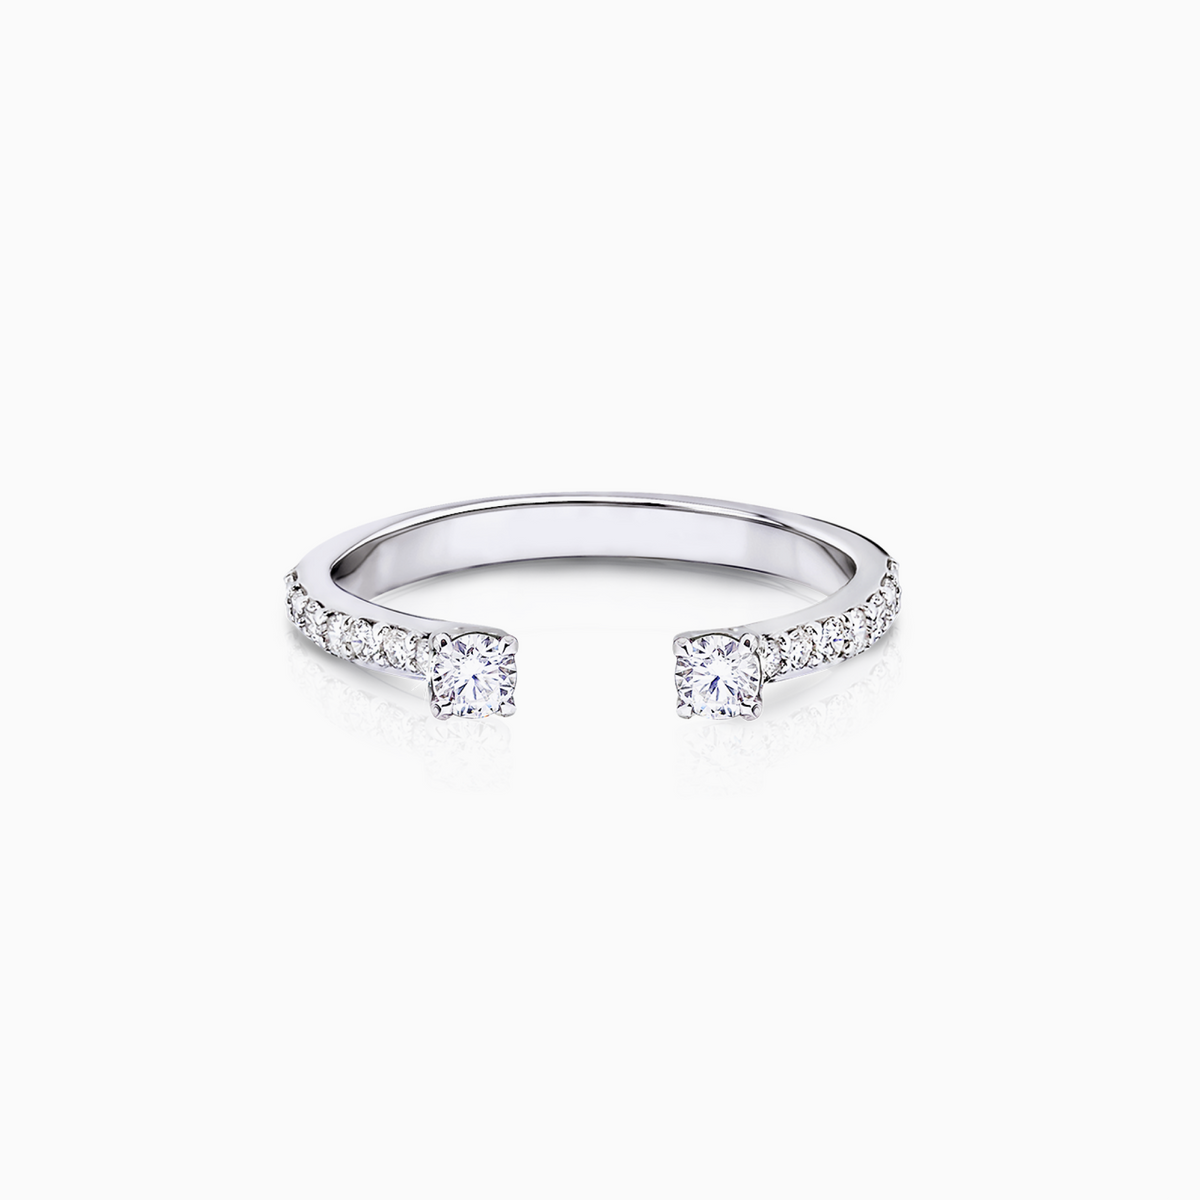 The Remi Diamond Ring